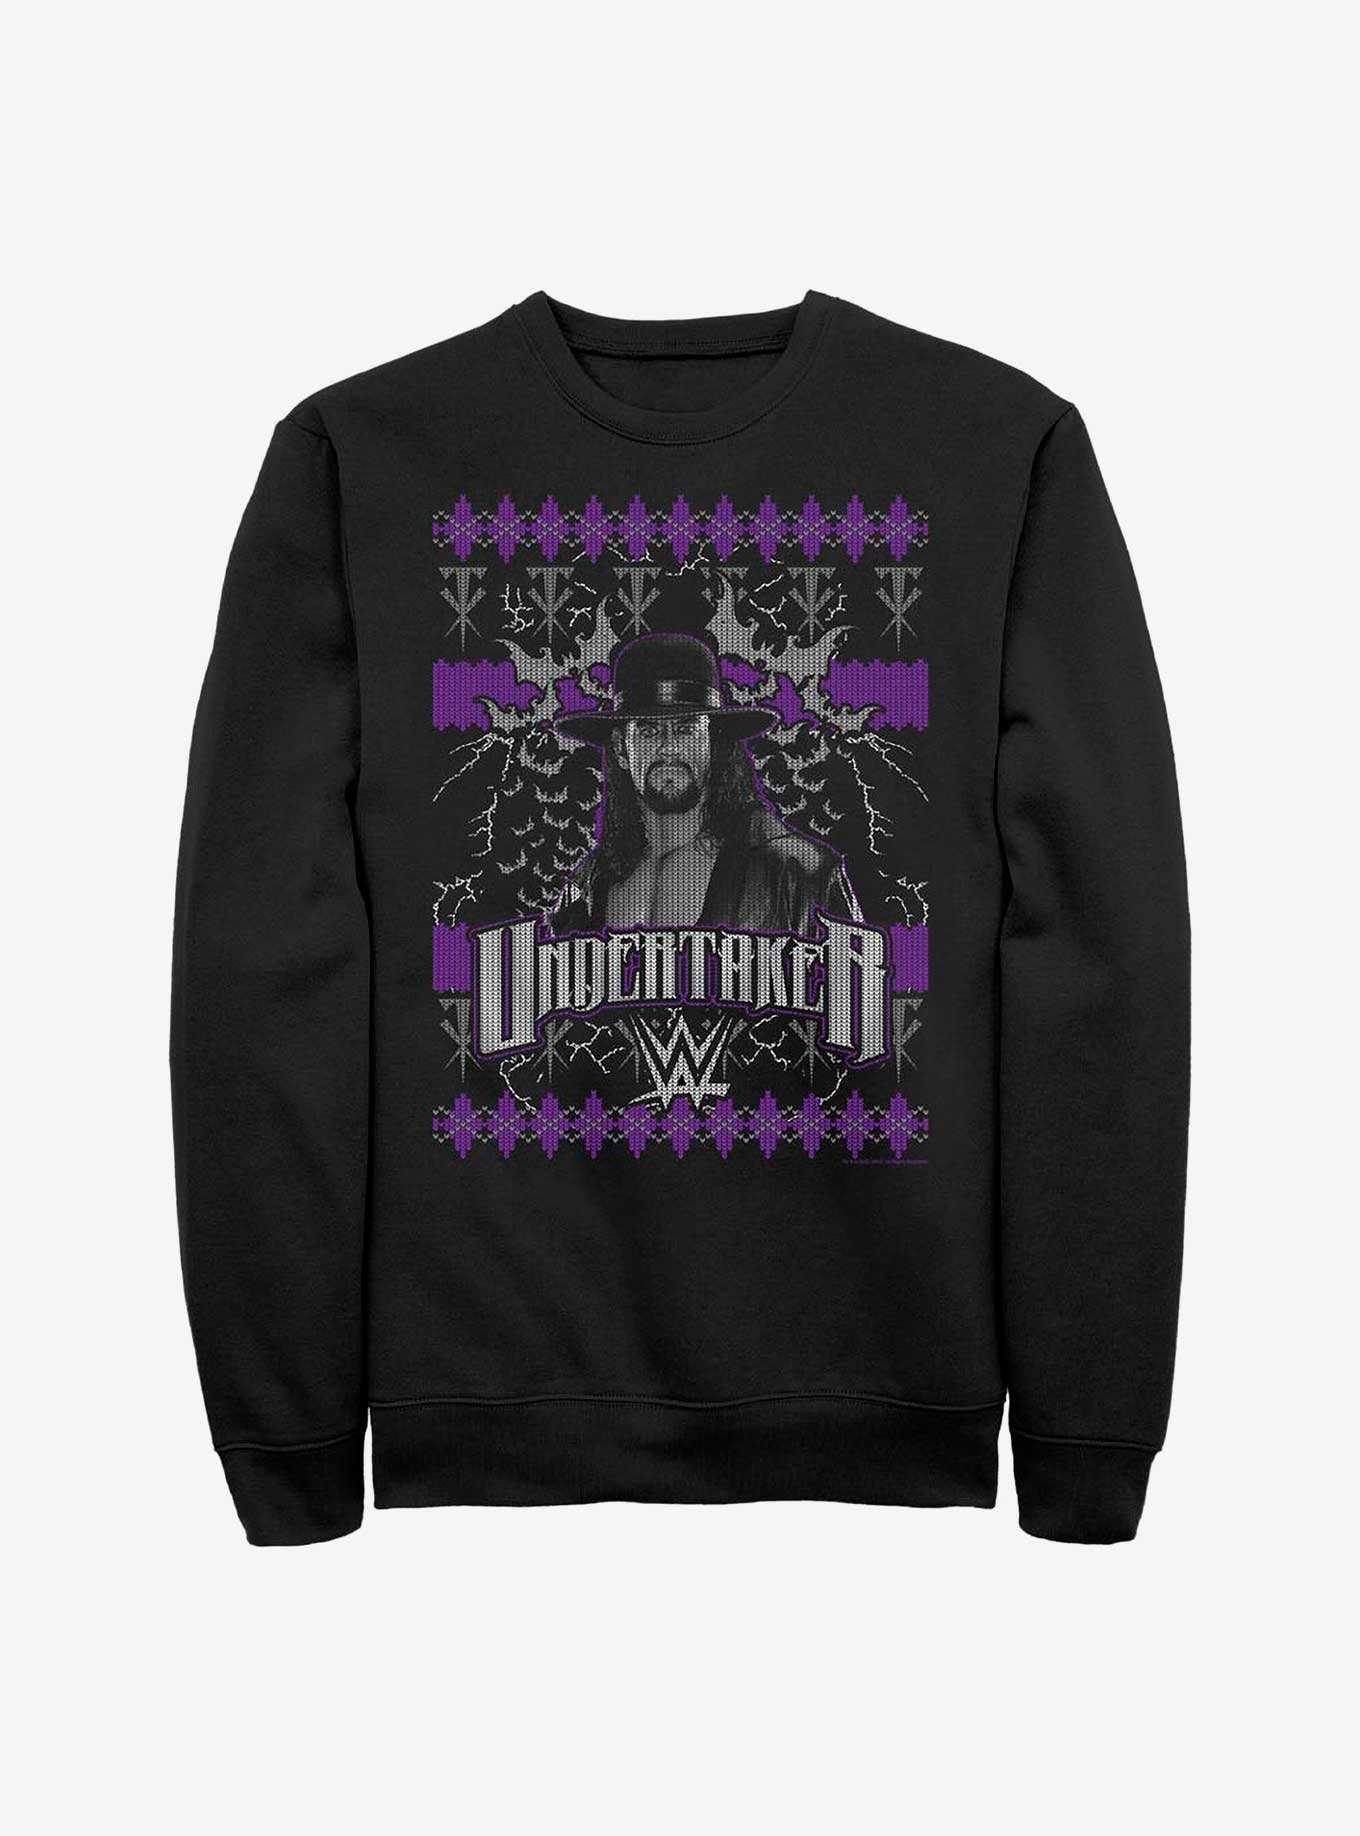 WWE The Undertaker Mark Calaway Ugly Christmas Sweatshirt, , hi-res